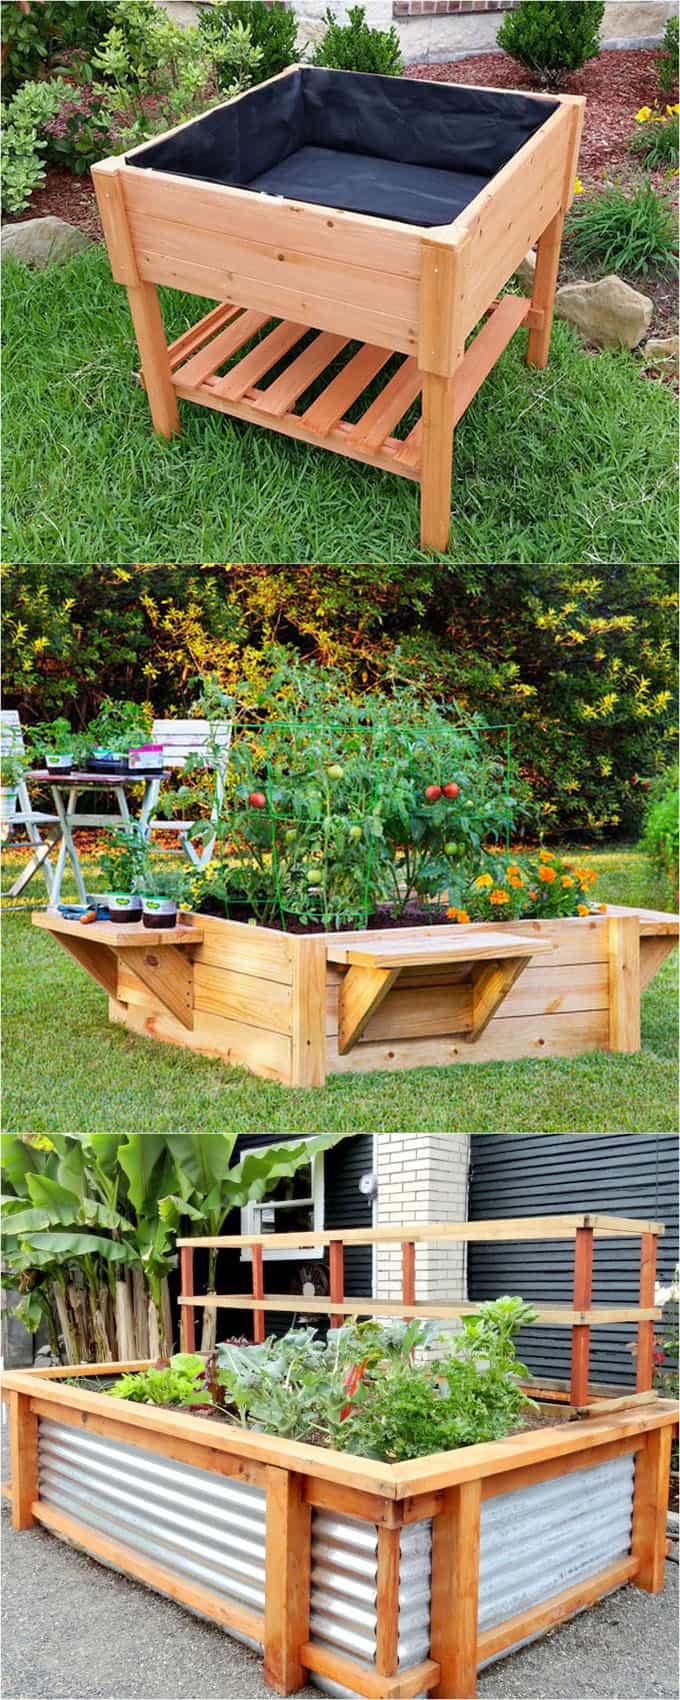 10 unique raised garden bed ideas vegetables 2020